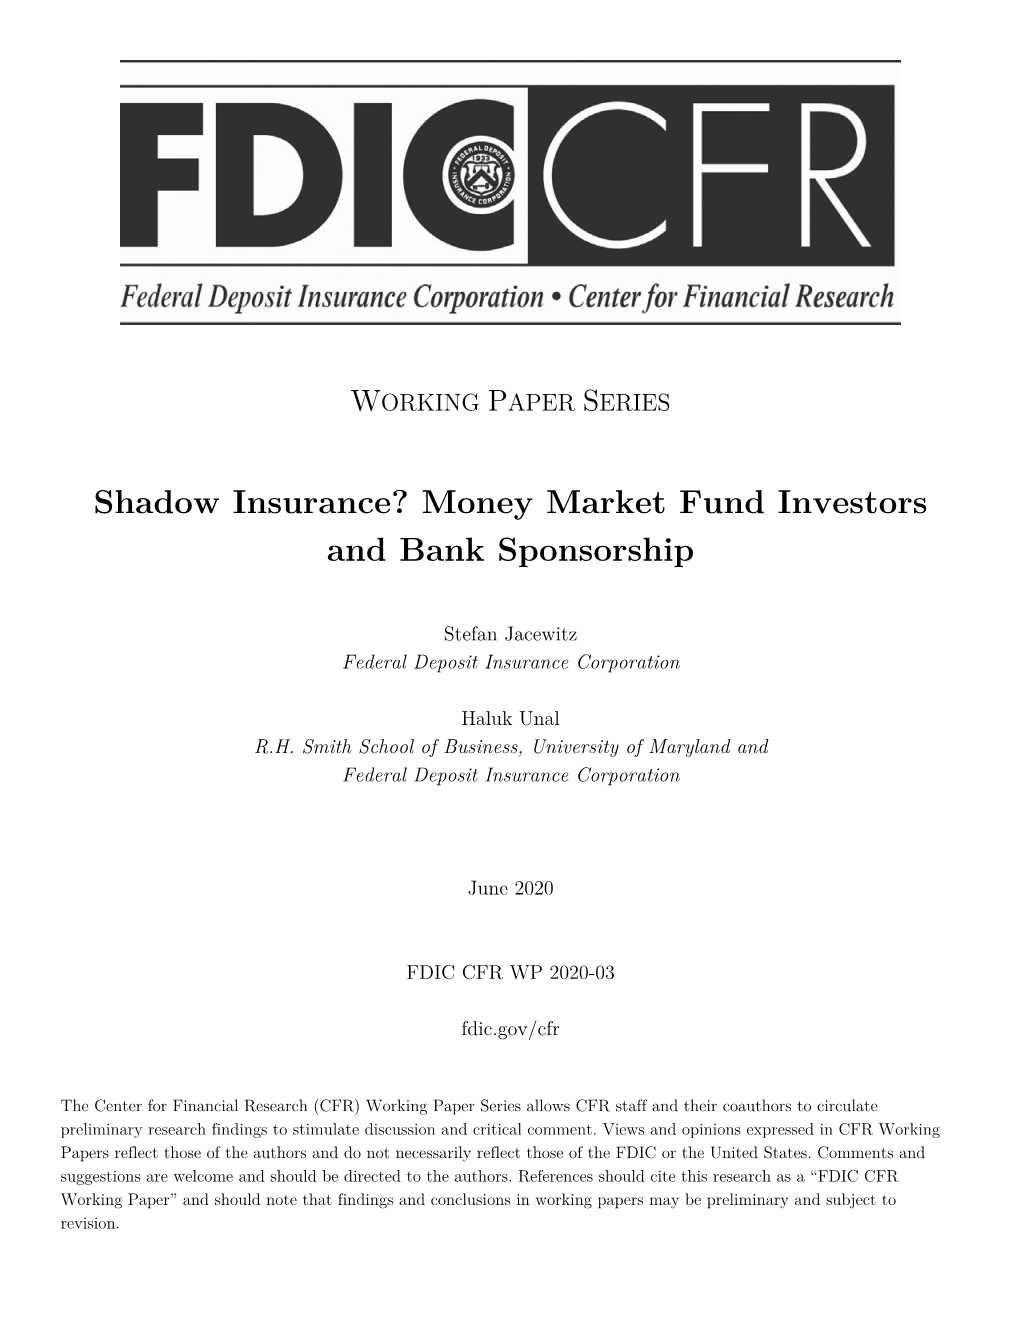 Shadow Insurance? Money Market Fund Investors and Bank Sponsorship